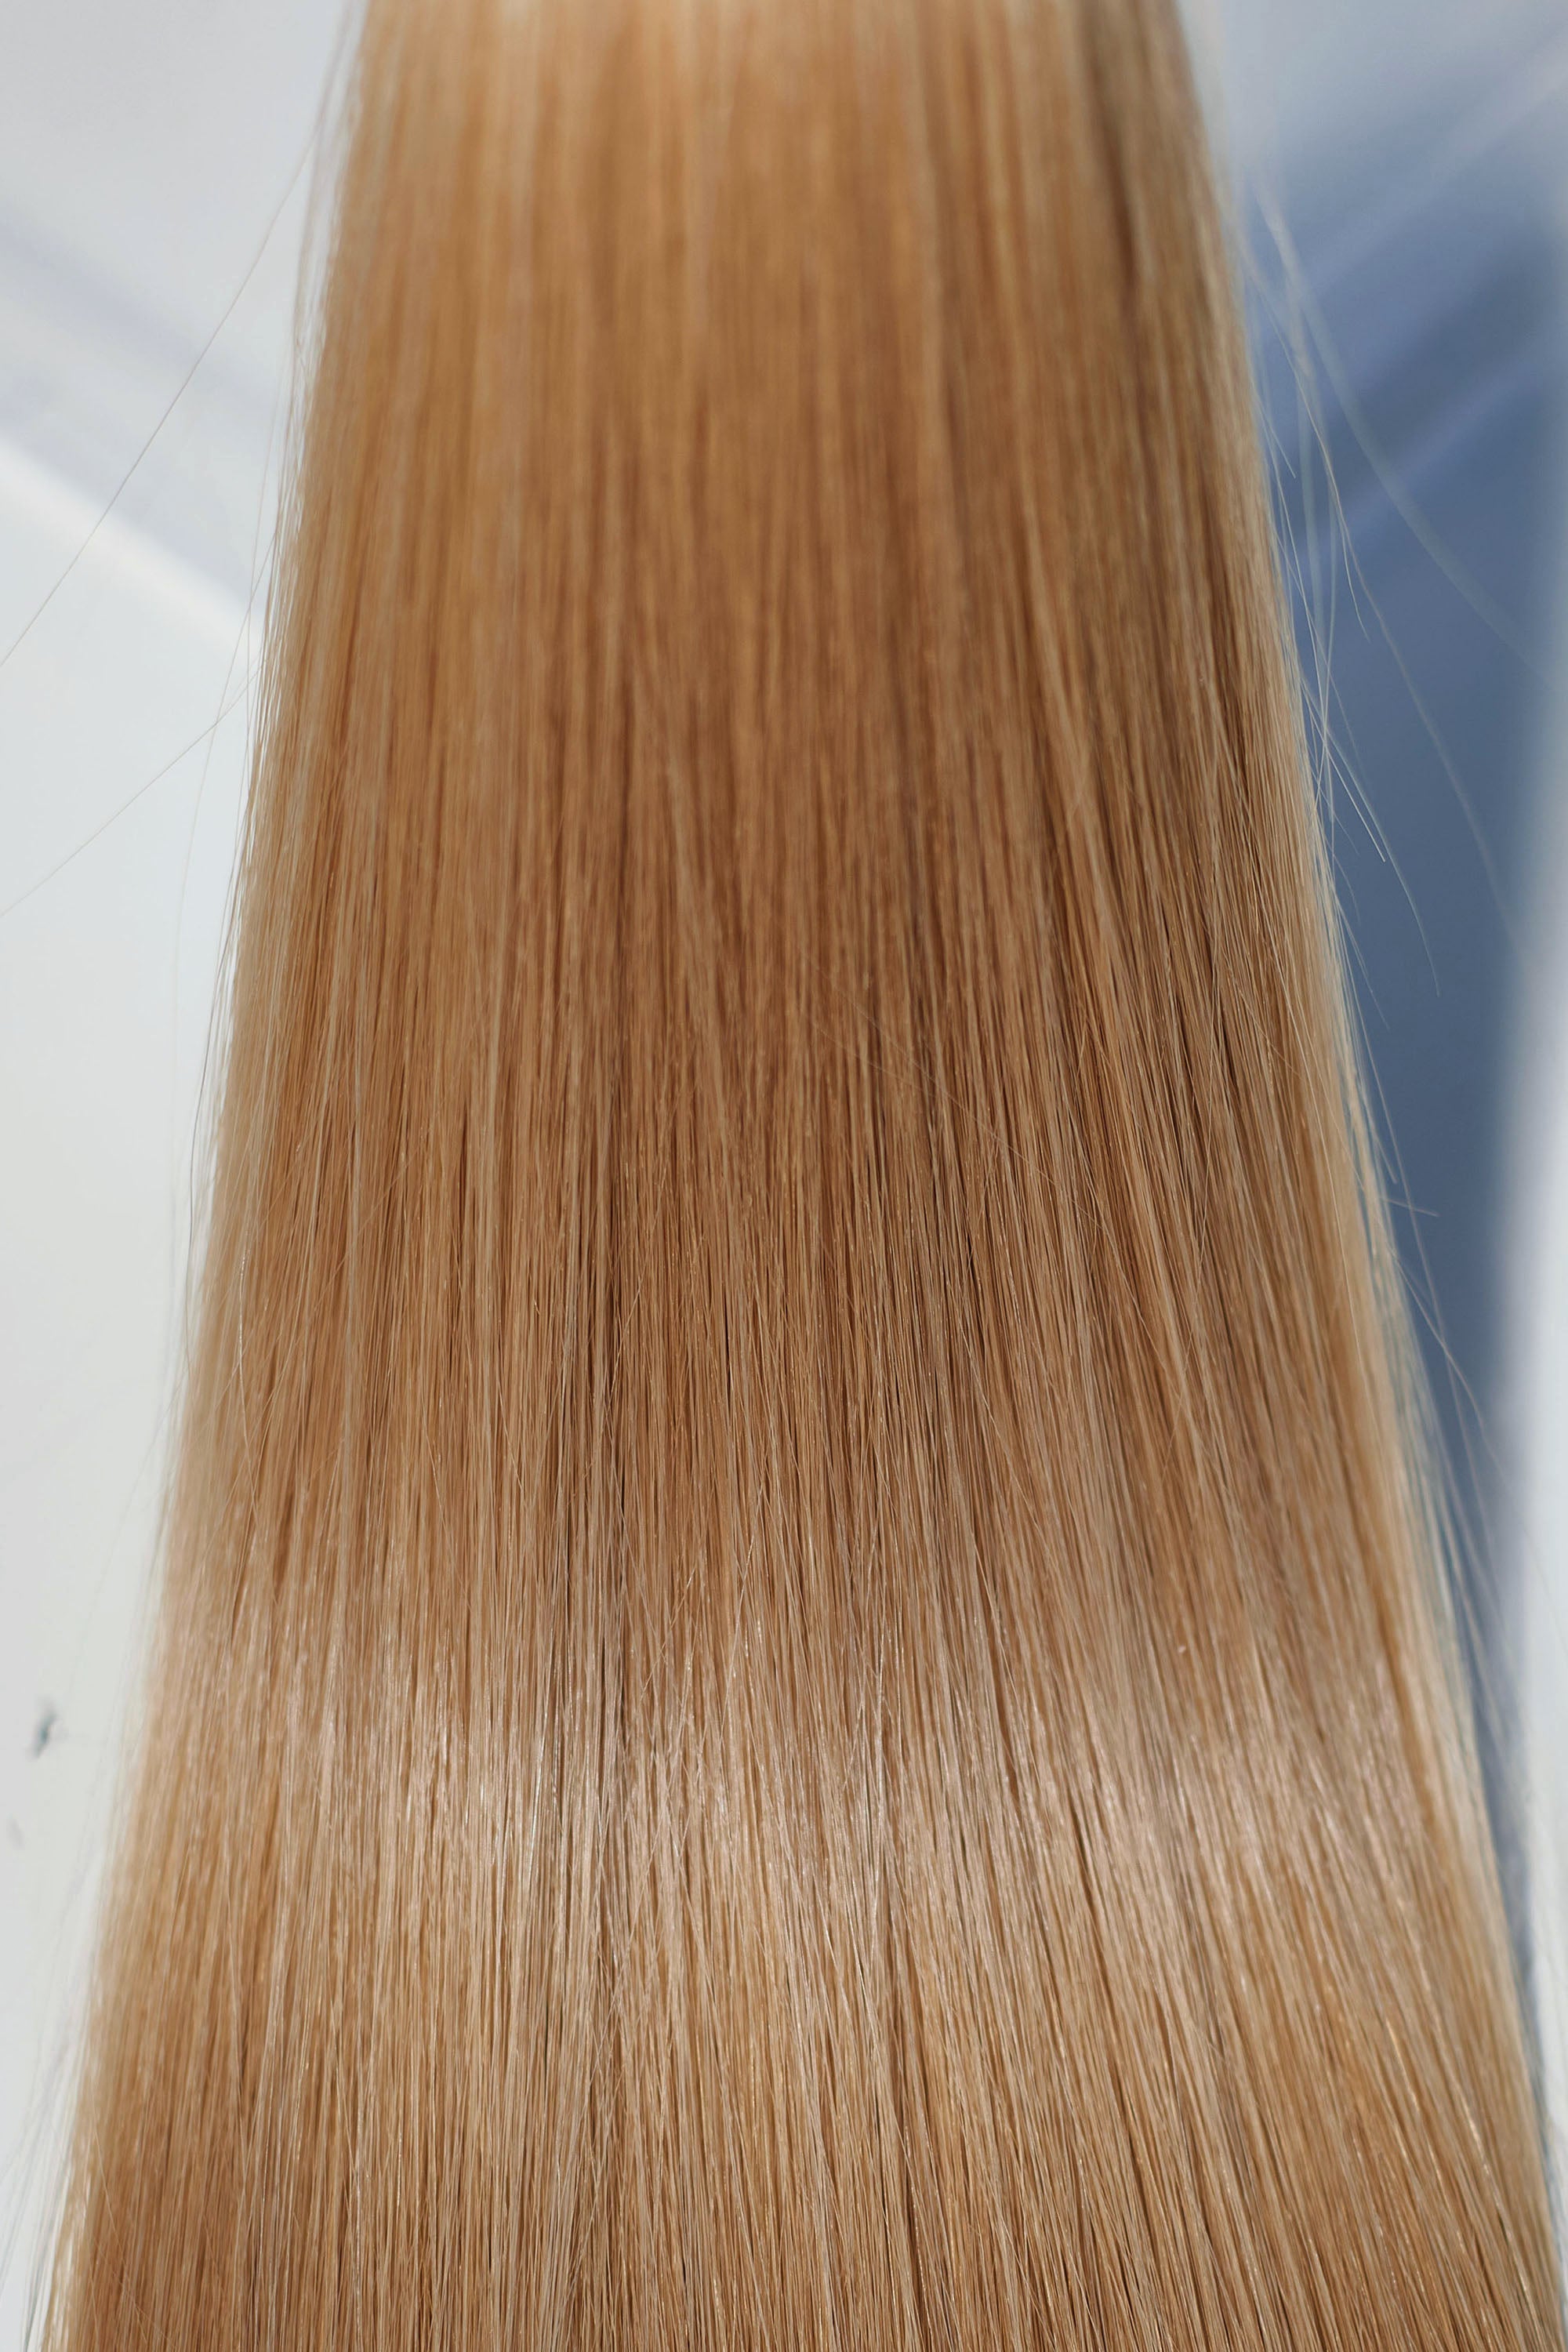 Behair professional Keratin Tip "Premium" 20" (50cm) Natural Straight Gold Sand #18 - 25g (Micro - 0.5g each pcs) hair extensions